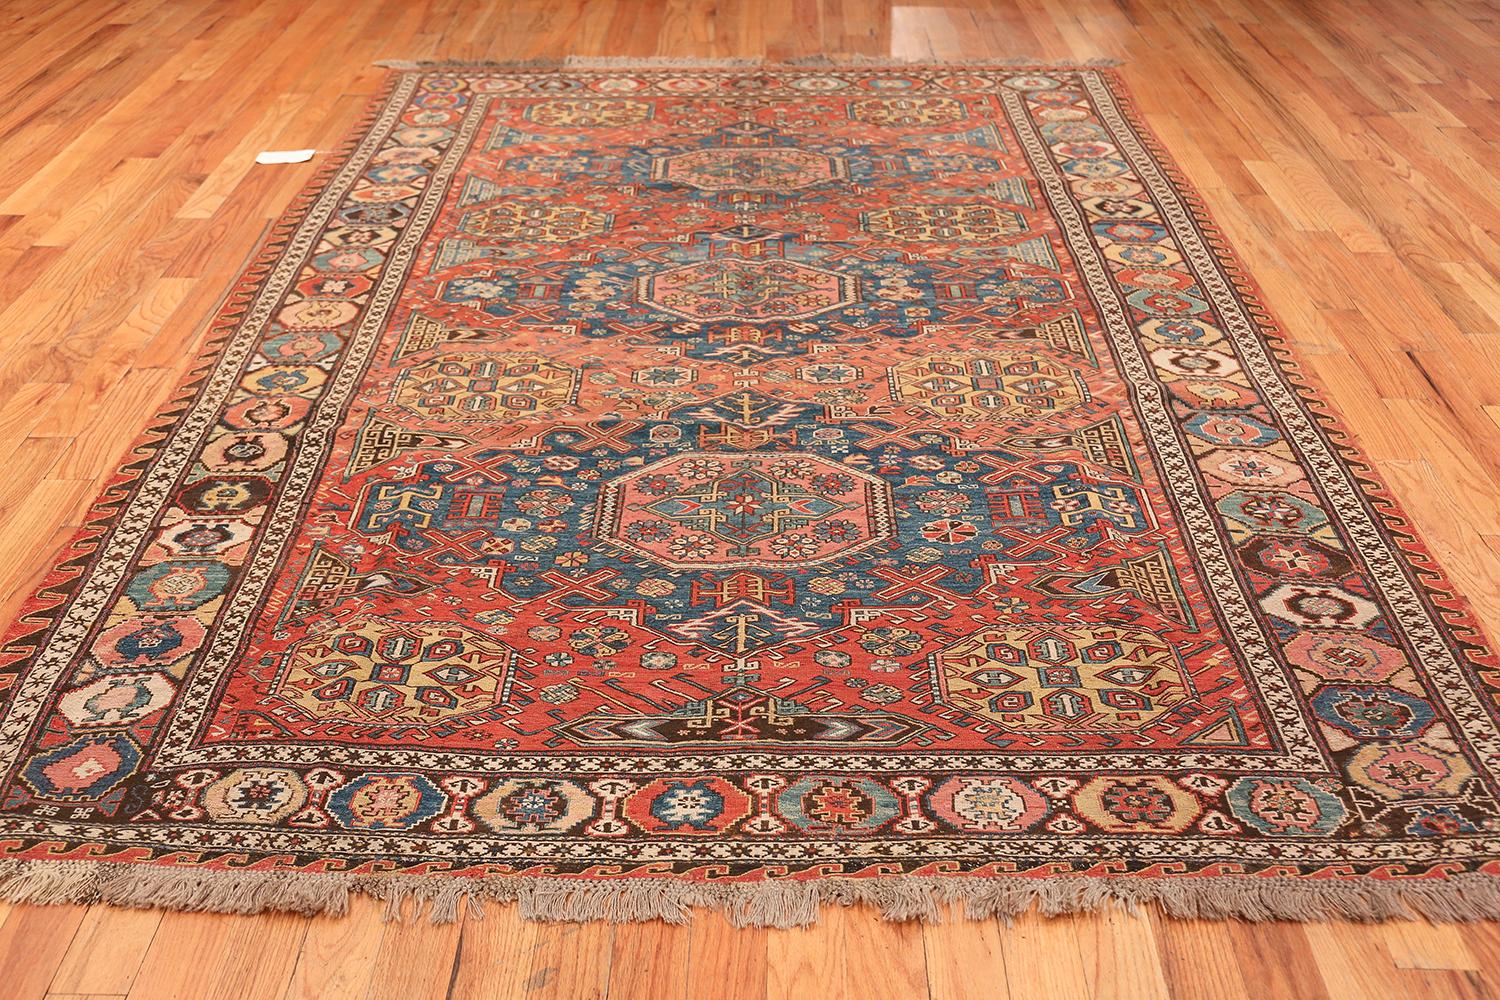 Beautiful flat-woven tribal antique Caucasian Soumak rug, country of origin / rug type: Caucasian rugs, date circa 1890's. Size: 6 ft 9 in x 9 ft 6 in (2.06 m x 2.9 m)

